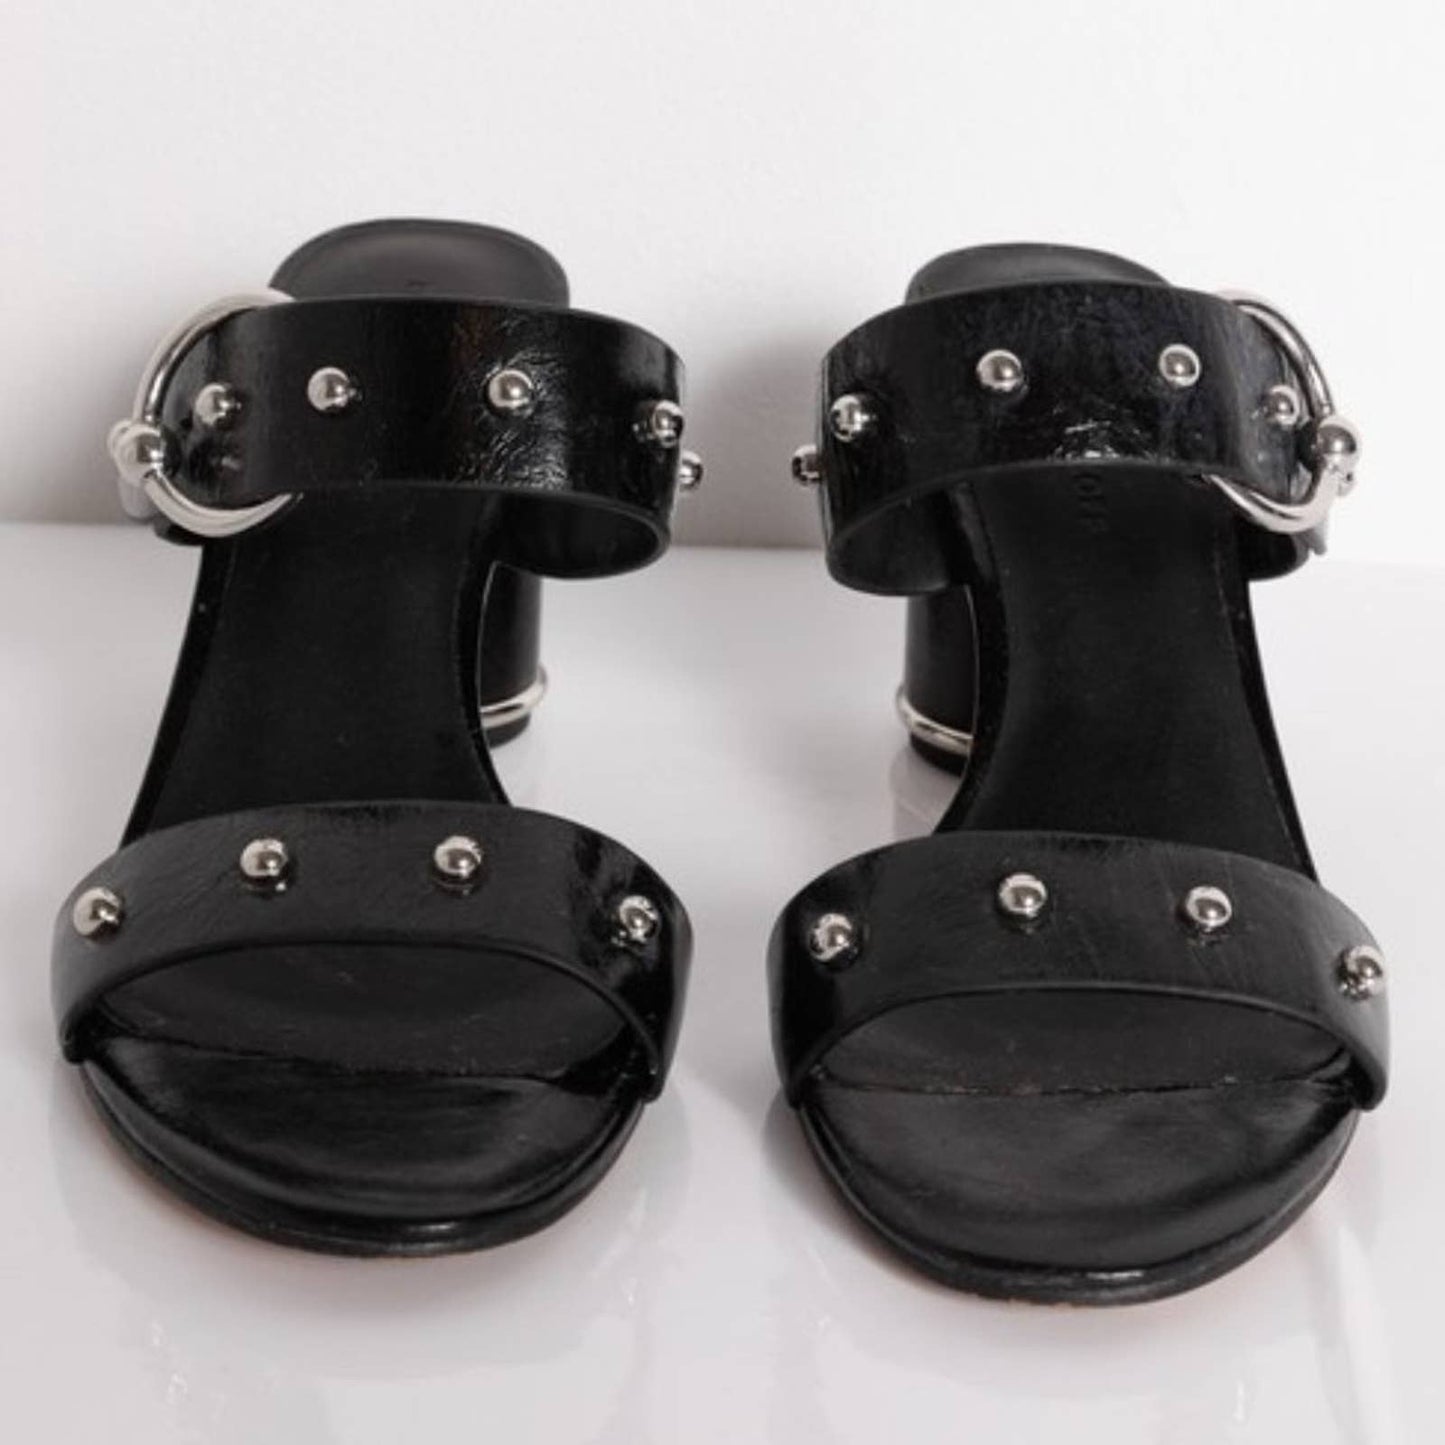 REBECCA MINKOFF Black Studded Leather Heeled Sandals